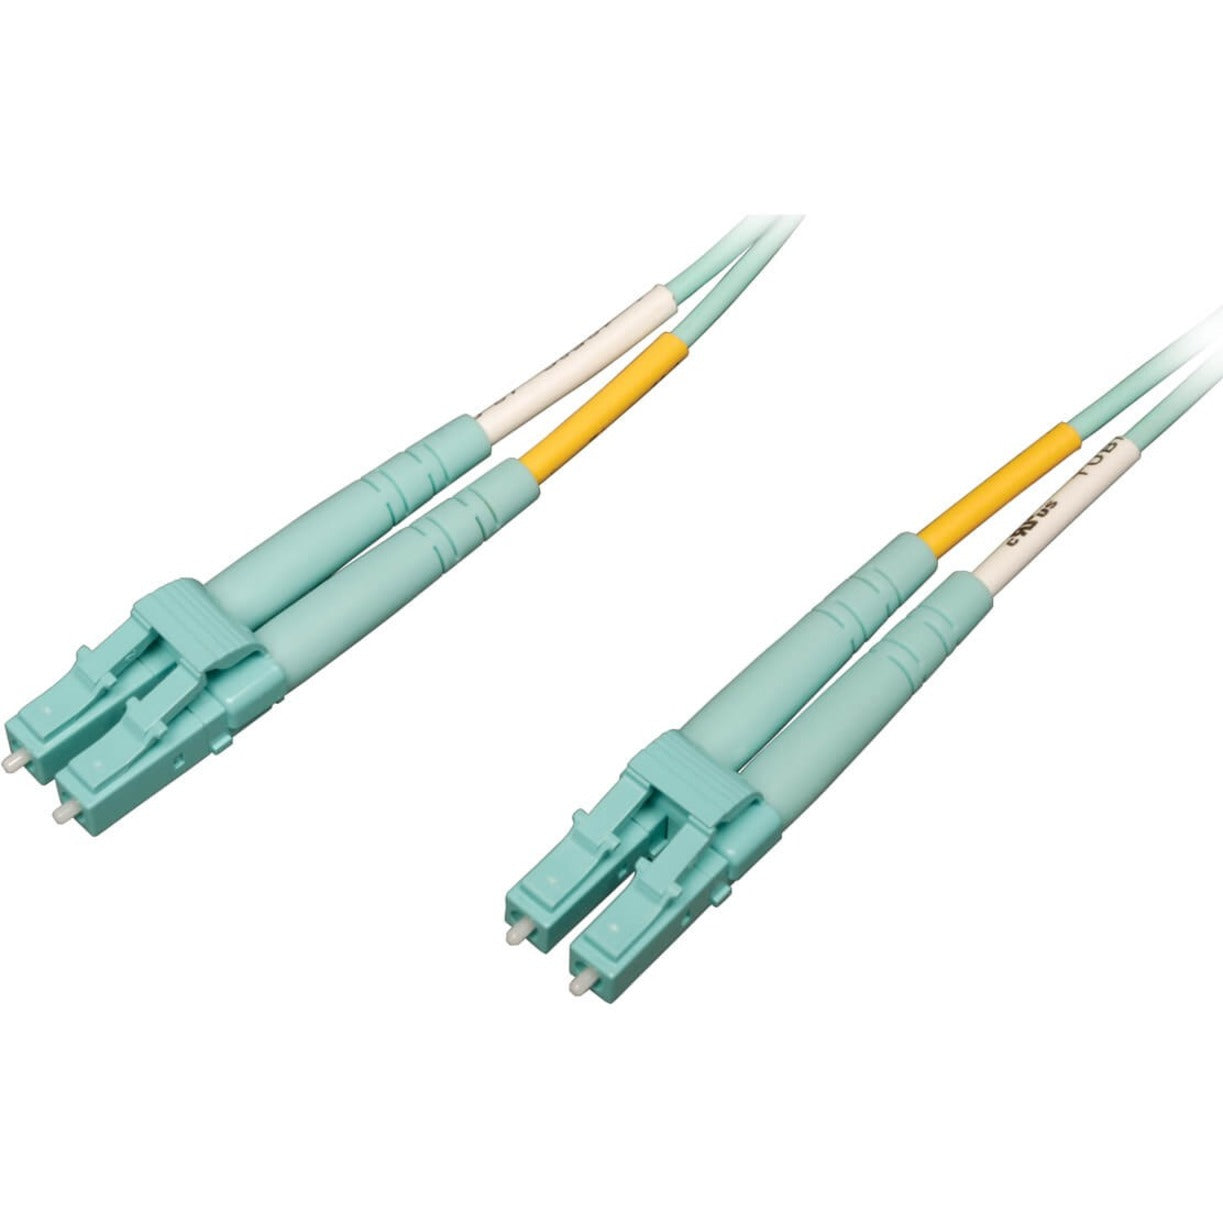 Tripp Lite N820-02M-OM4 Fiber Optic Duplex Patch Cable, 6.60 ft, Multi-mode, Aqua